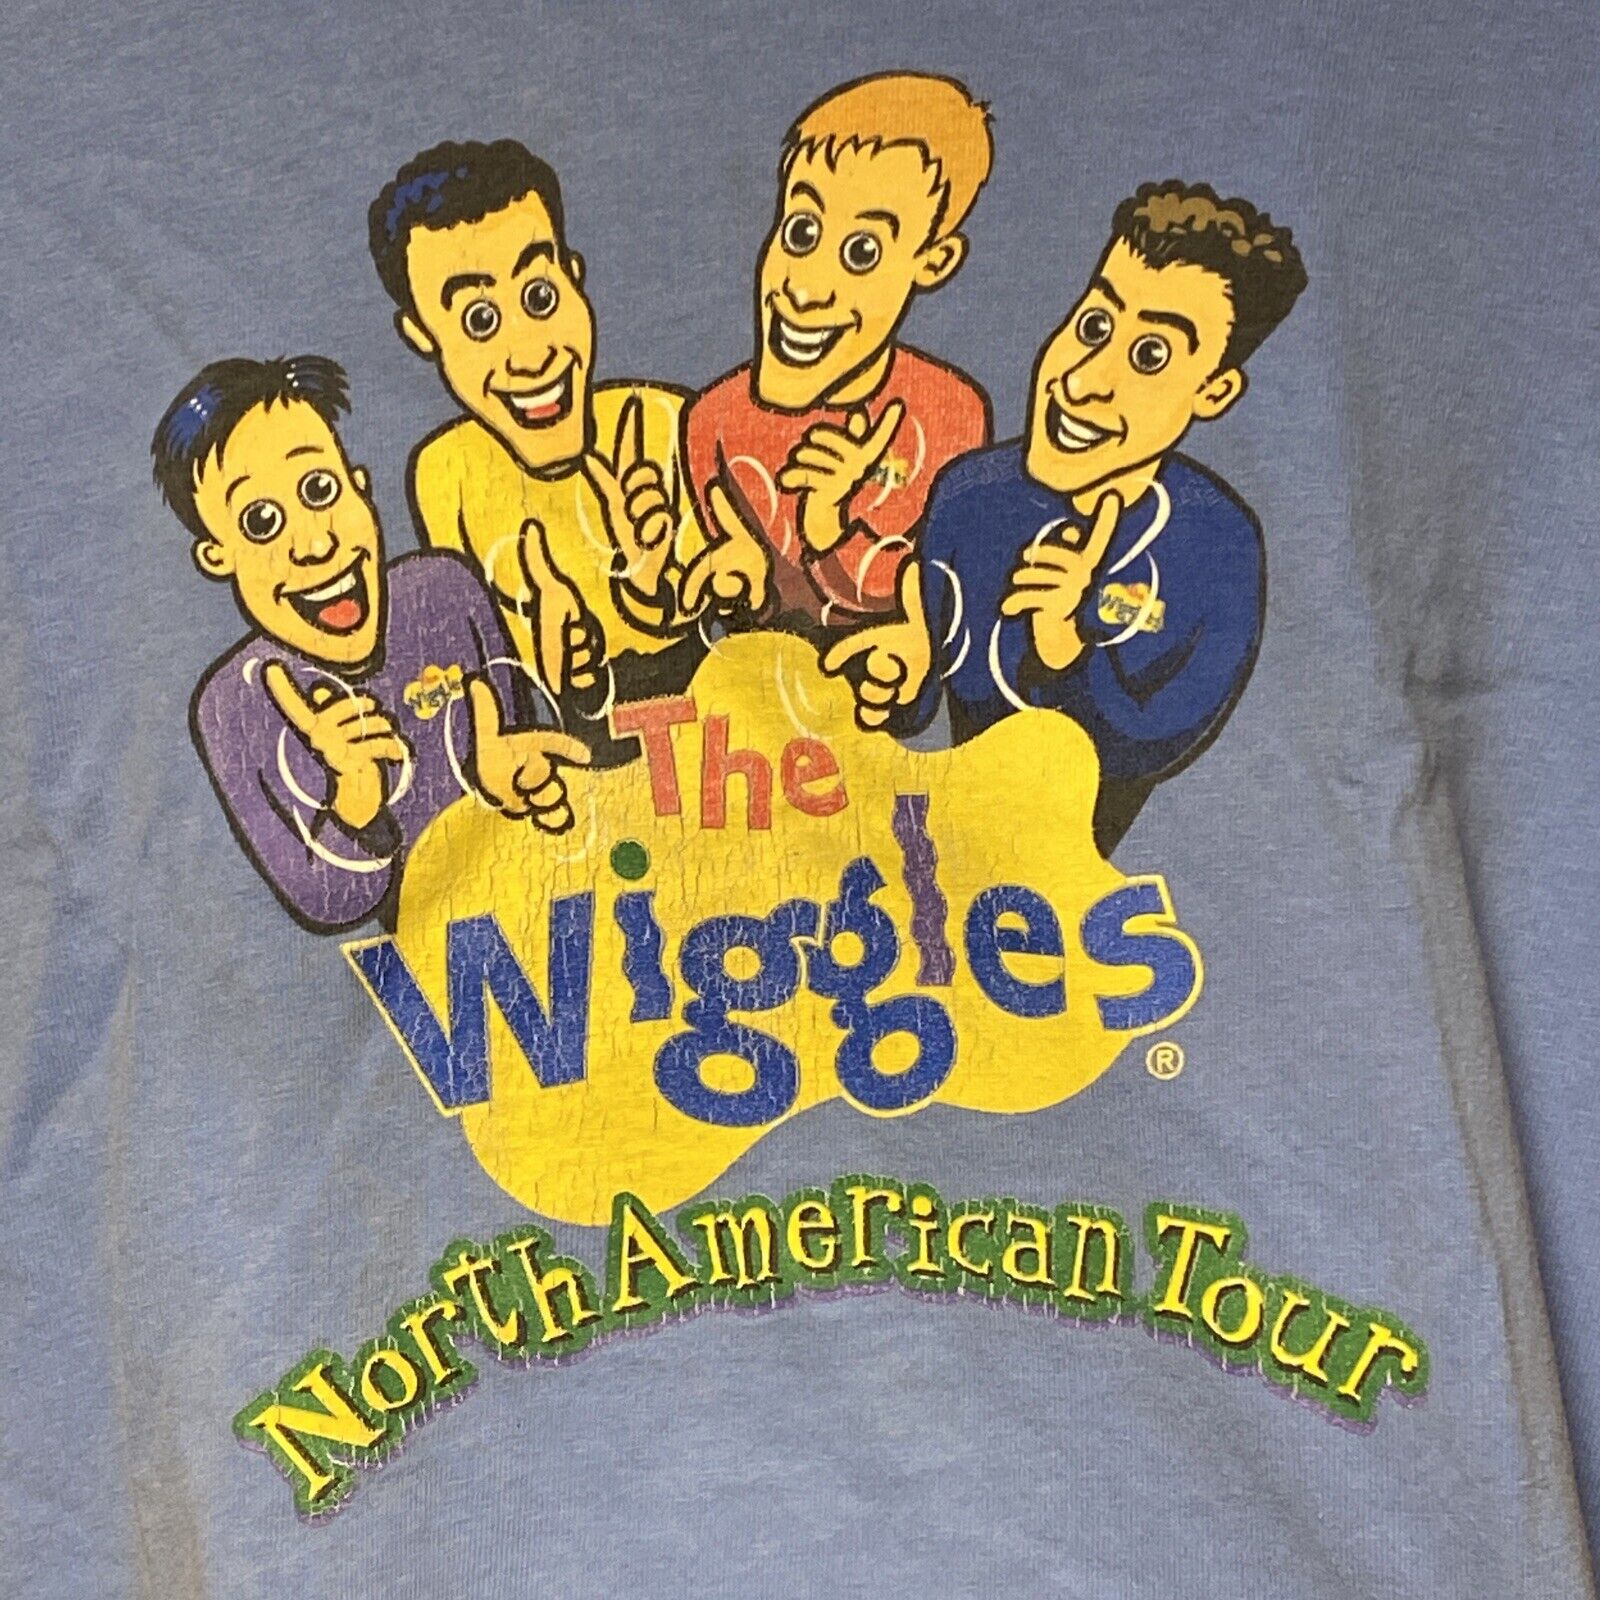 The Wiggles 1998 Tour, Wigglepedia